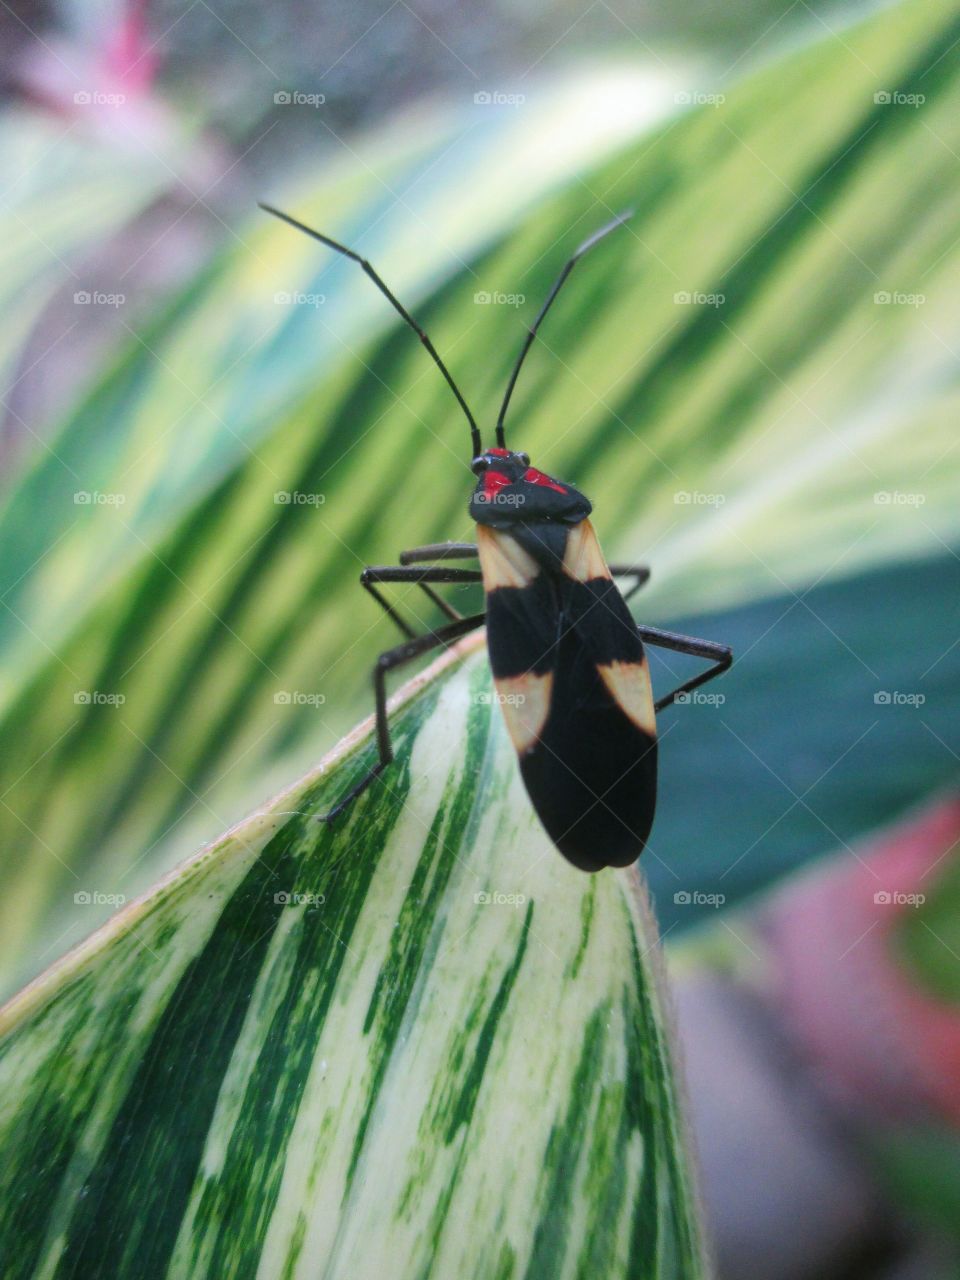 Lygaeidae bug